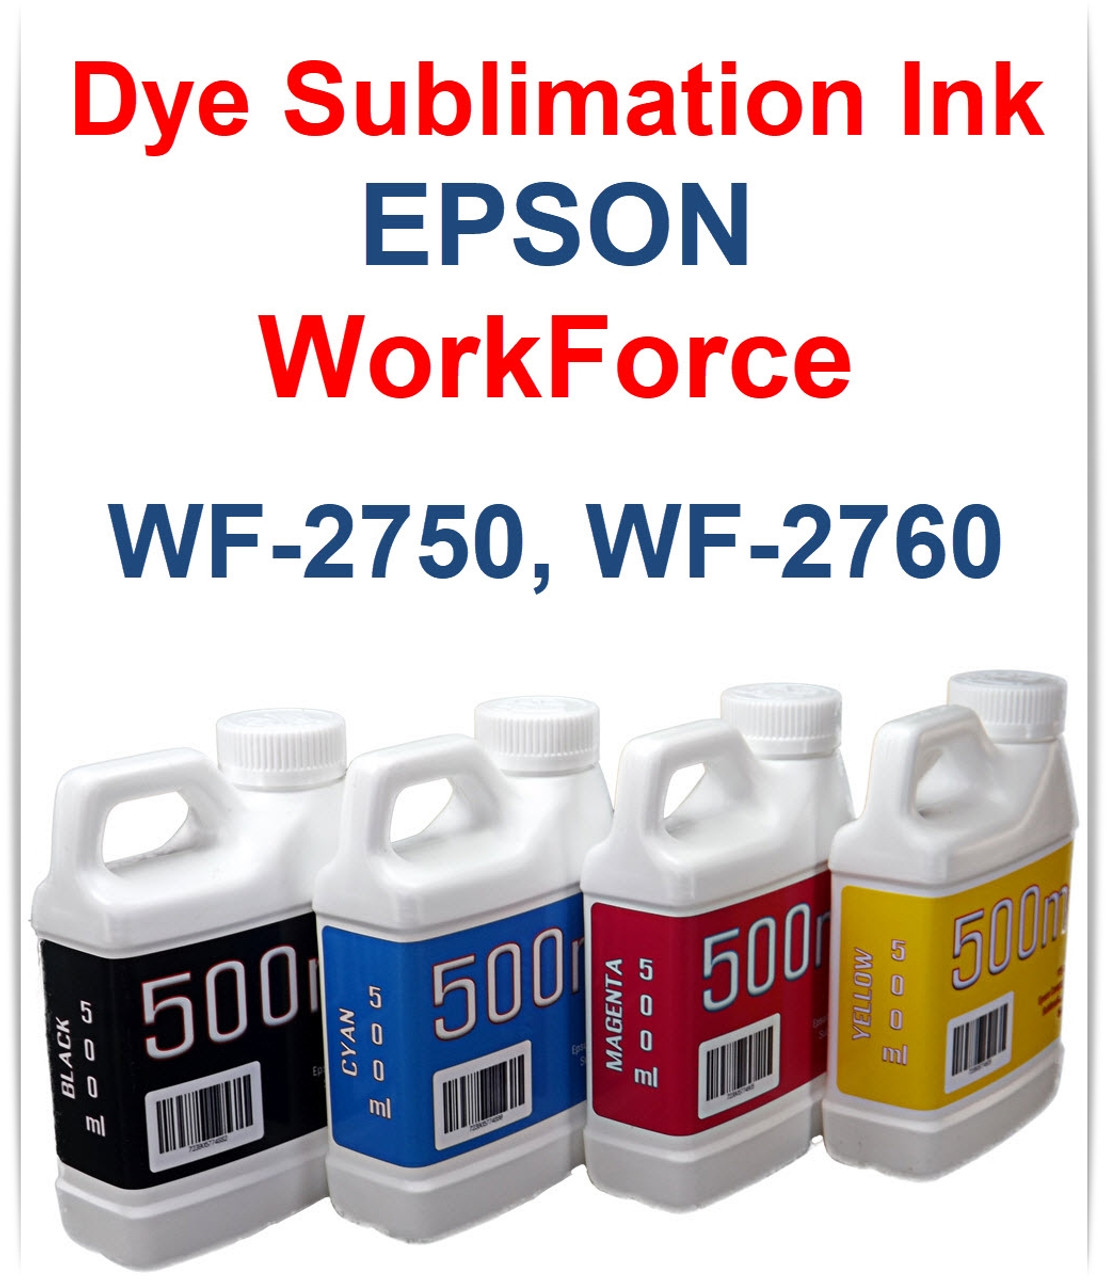 4- 500ml bottles Dye Sublimation Ink for Epson WorkForce WF-2750 WF-2760 Printers